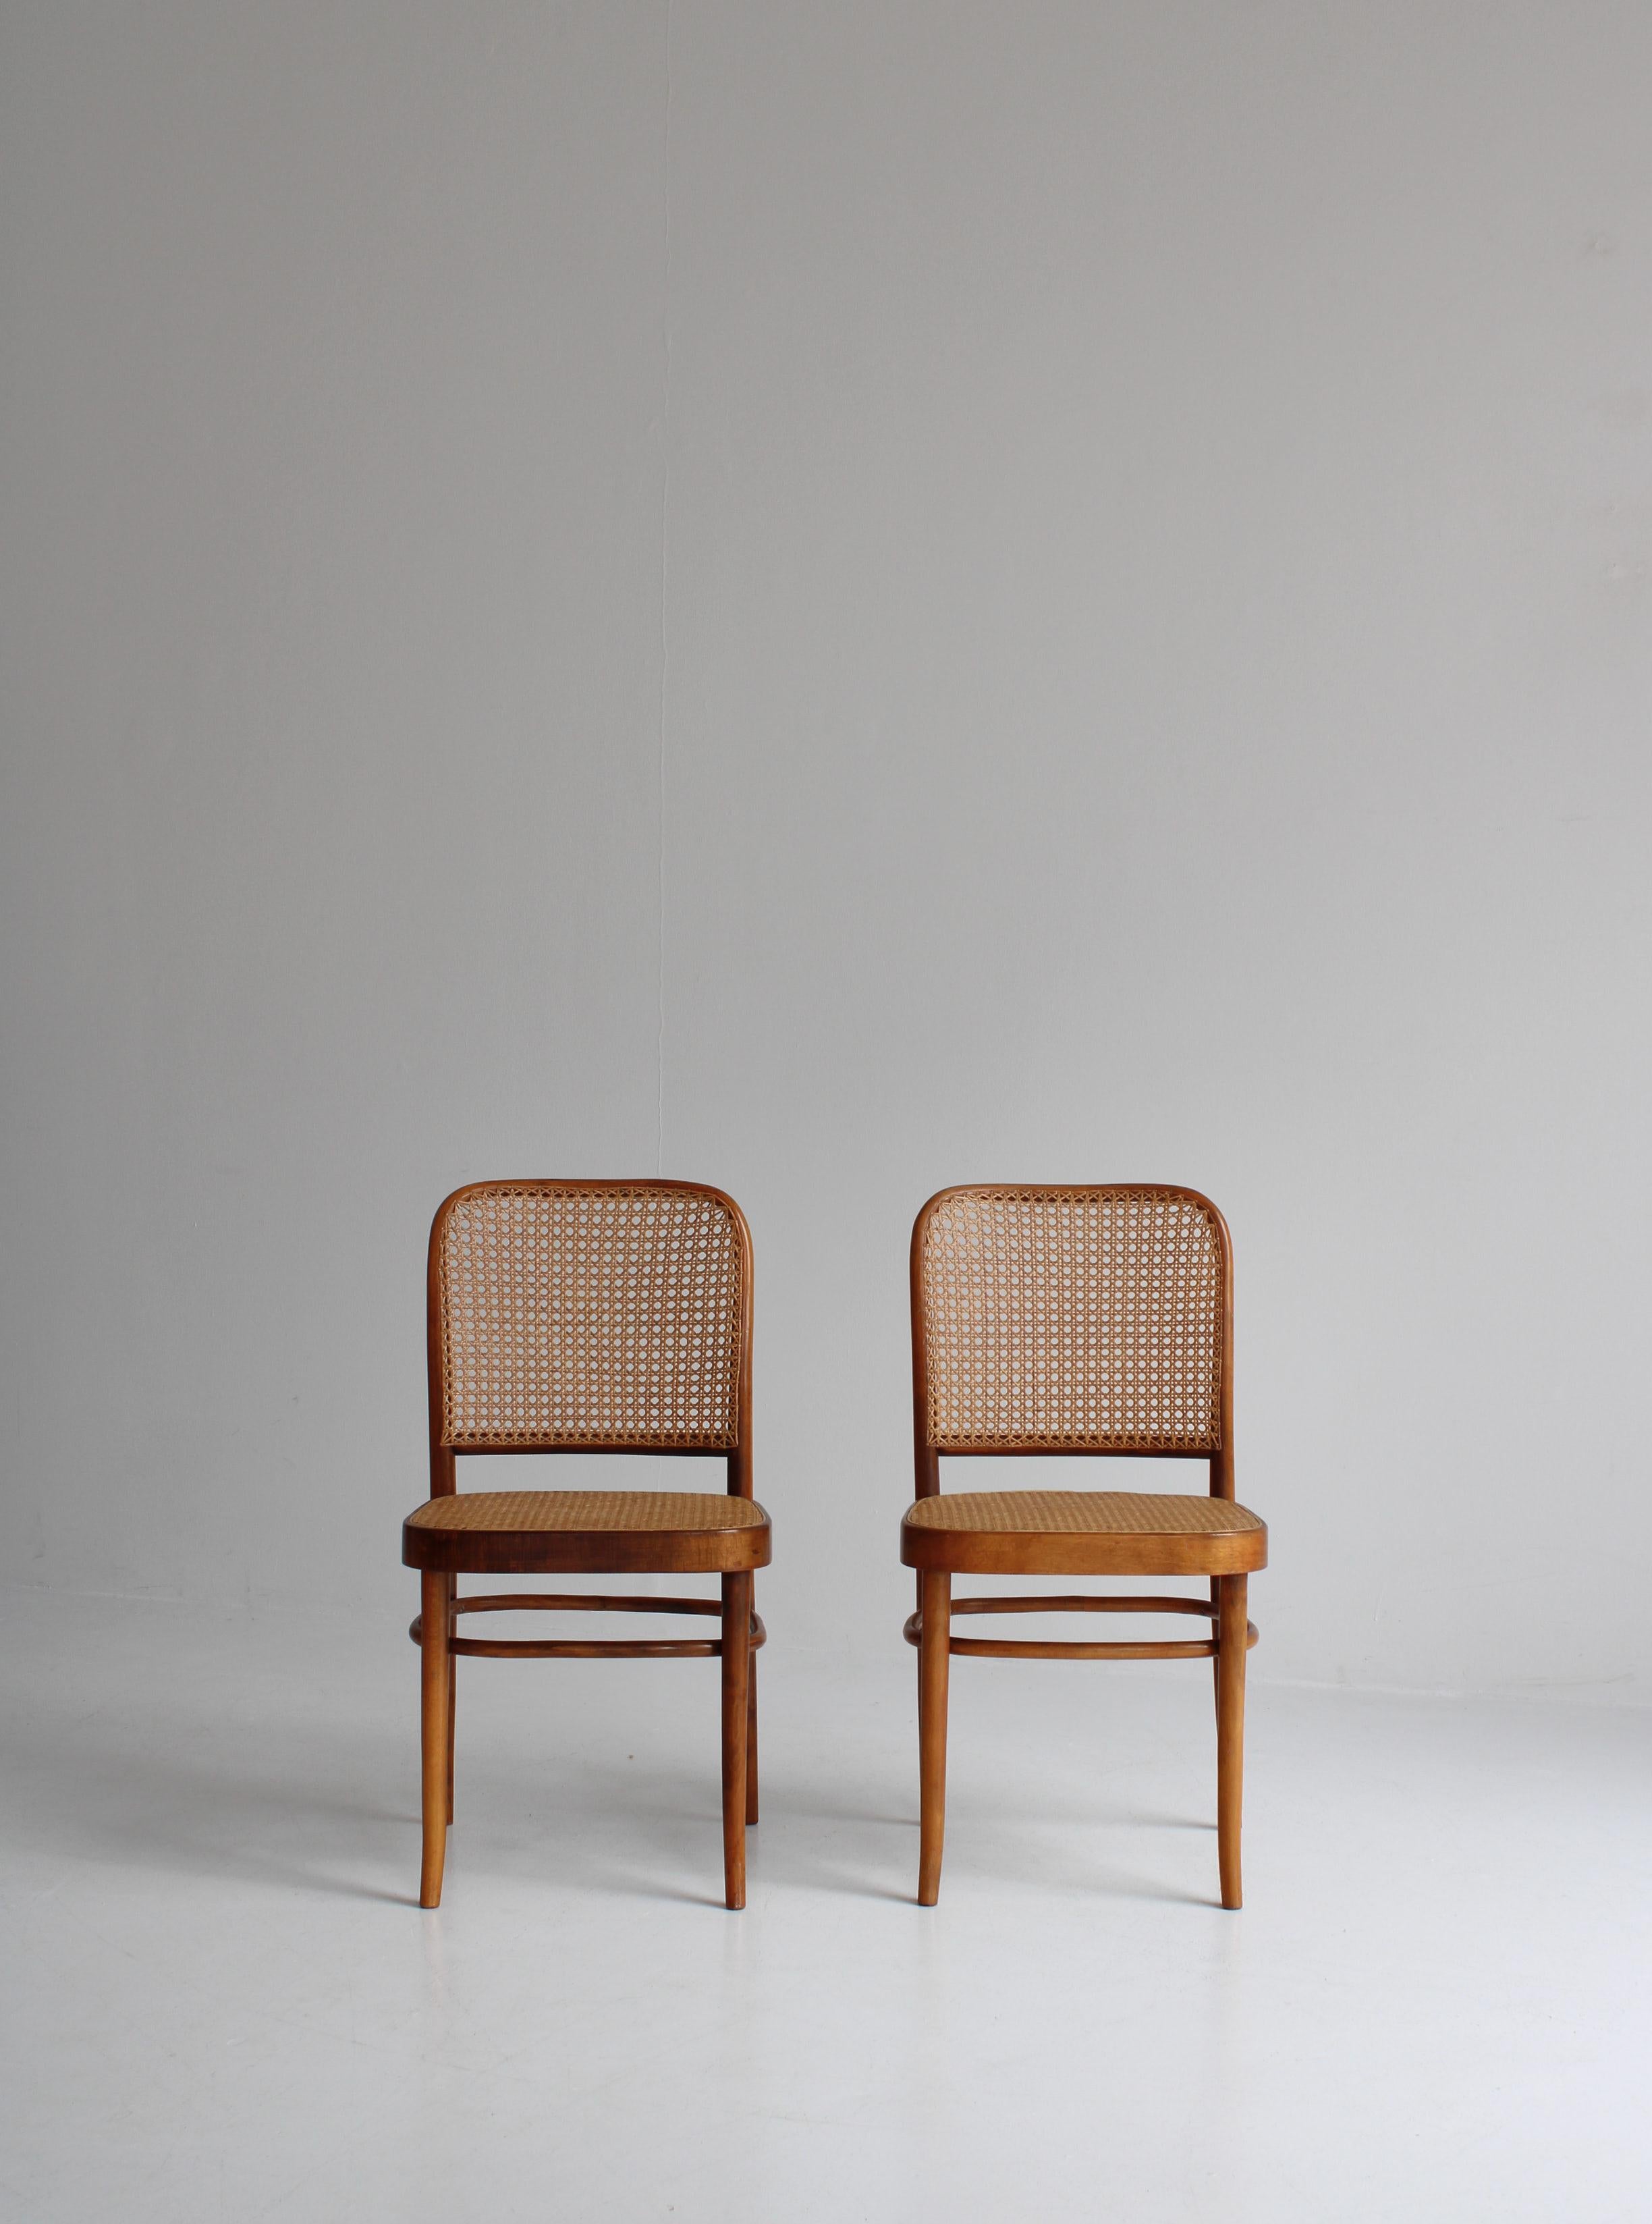 Danish Fritz Hansen Thonet 811 Chair by Josef Hoffmann in Bentwood and Cane, 1930s